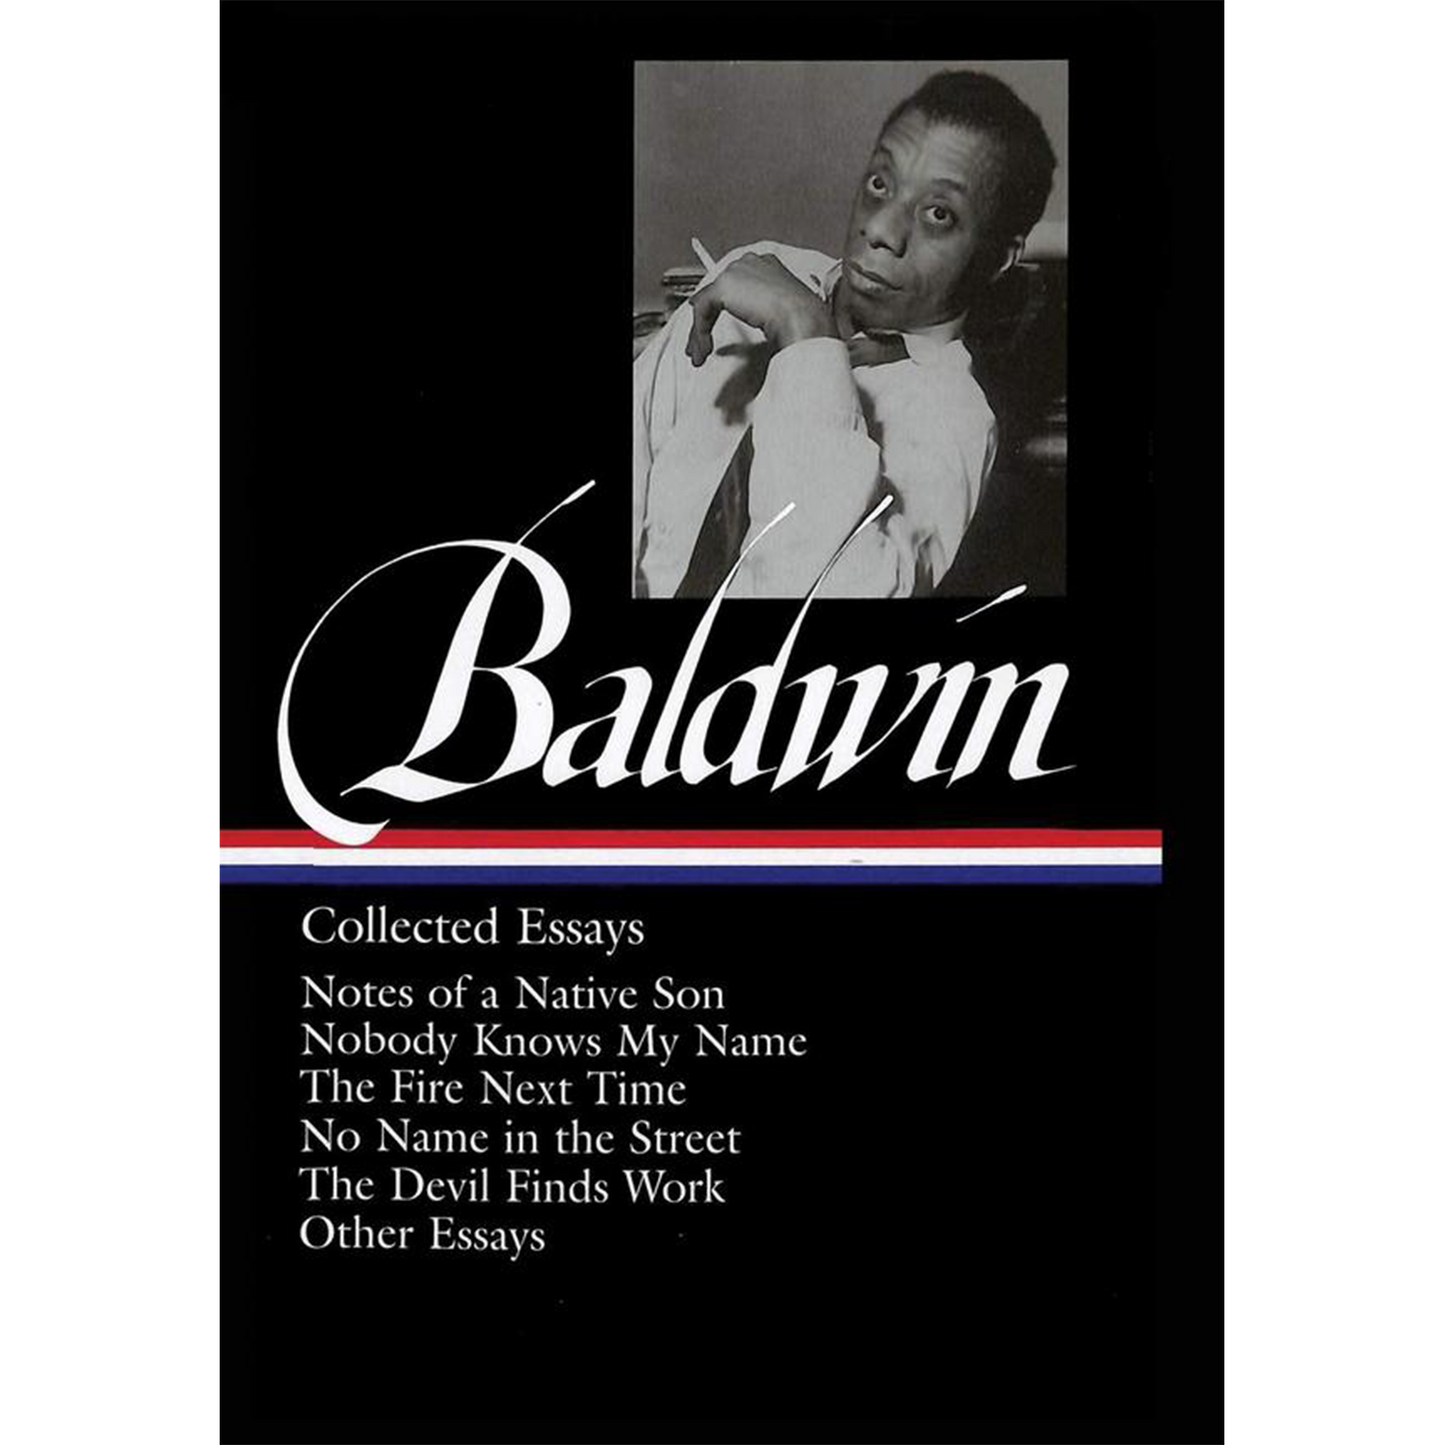 James Baldwin Collected Essays (Hardcover)